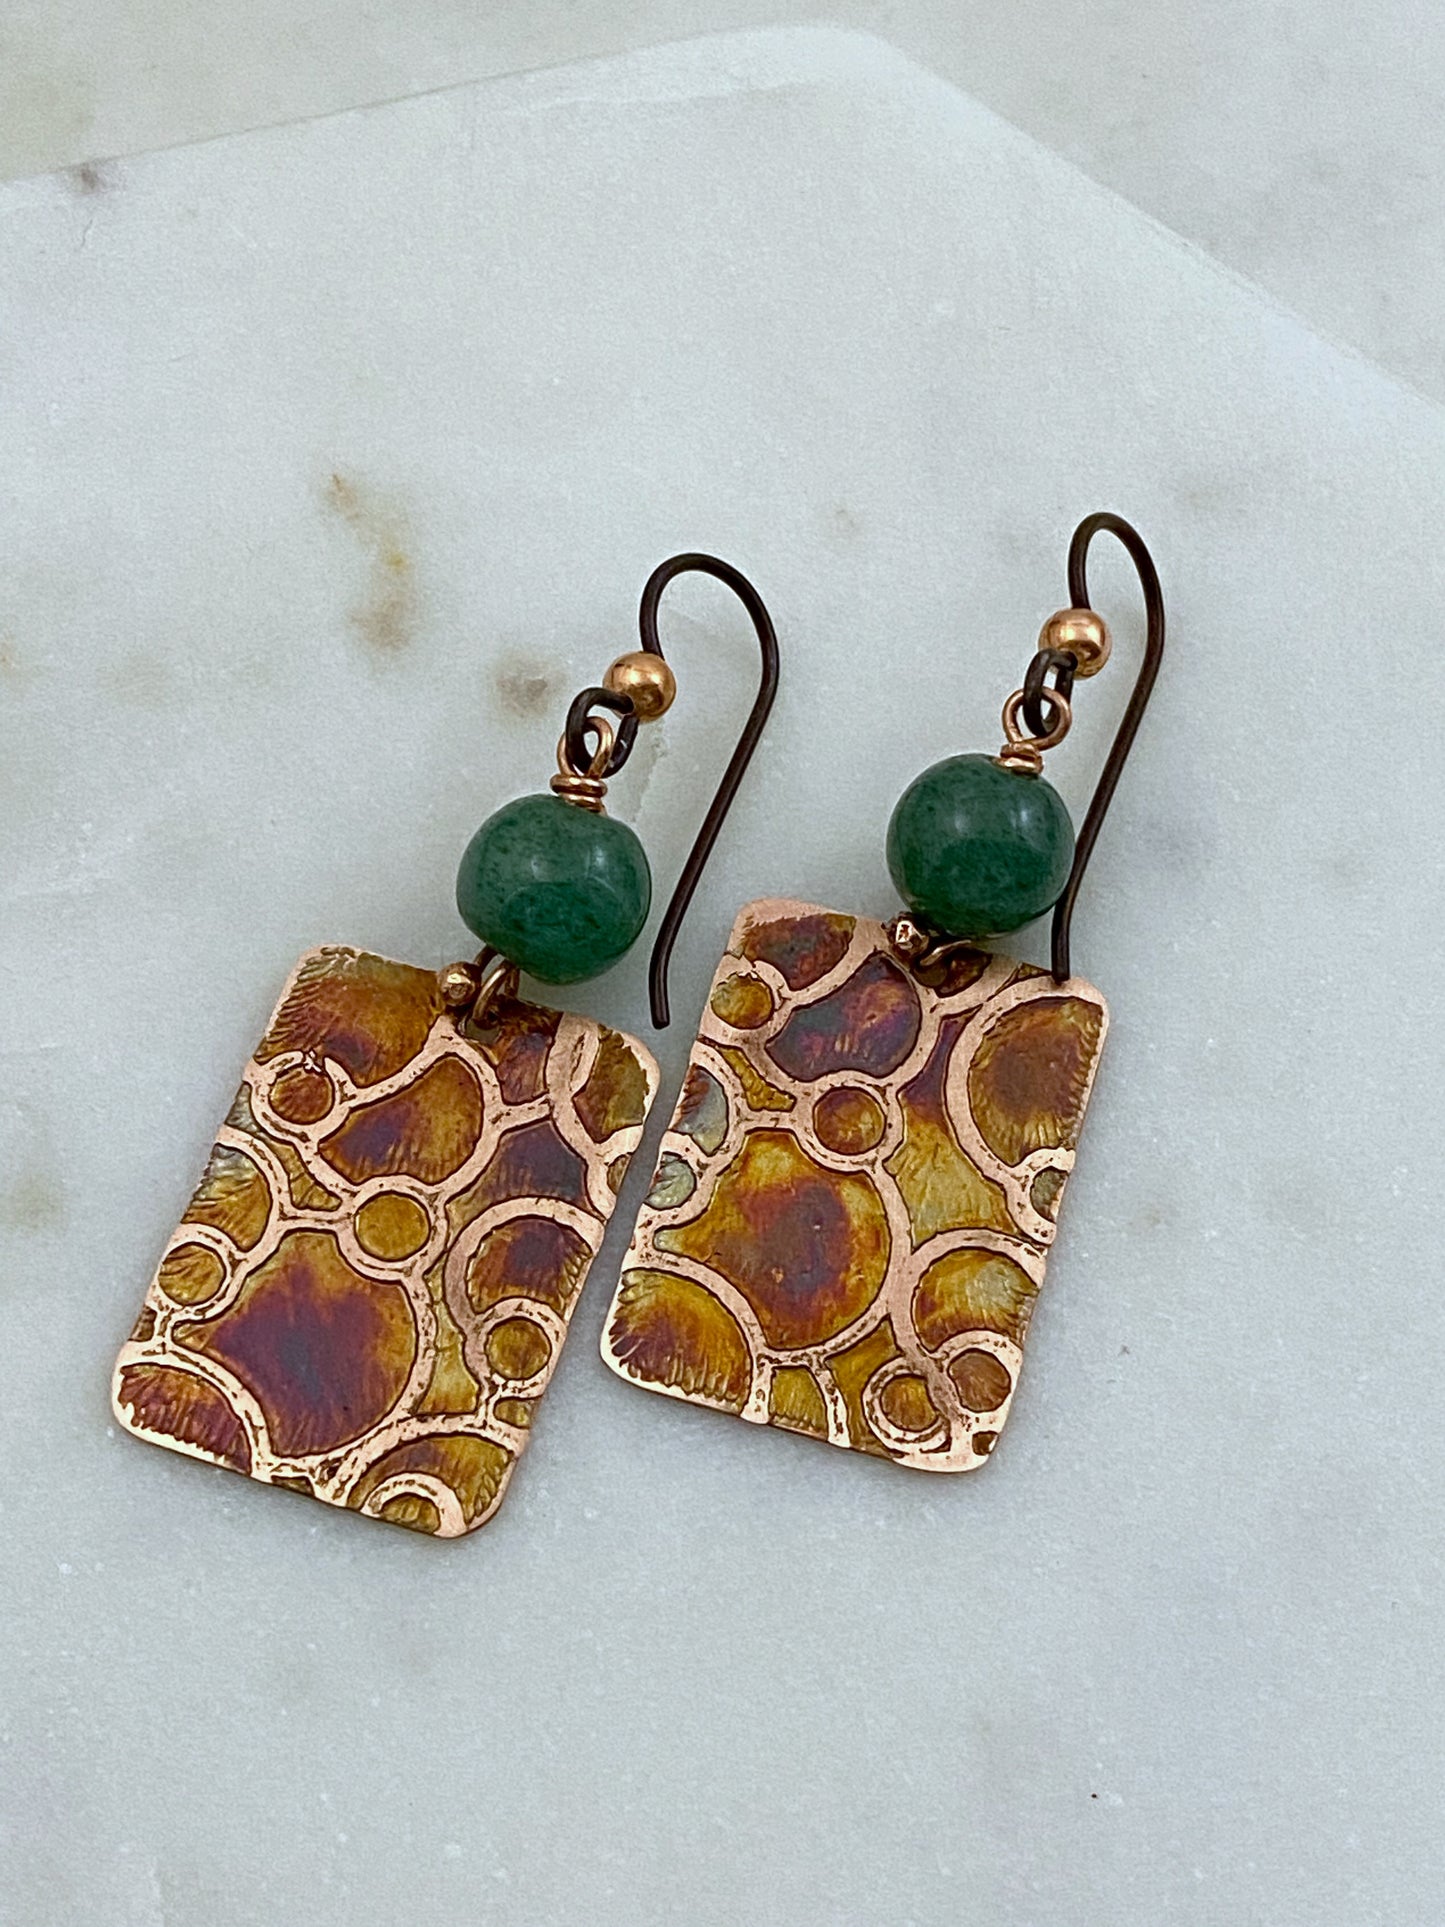 Acid  etched copper earrings with jade gemstones